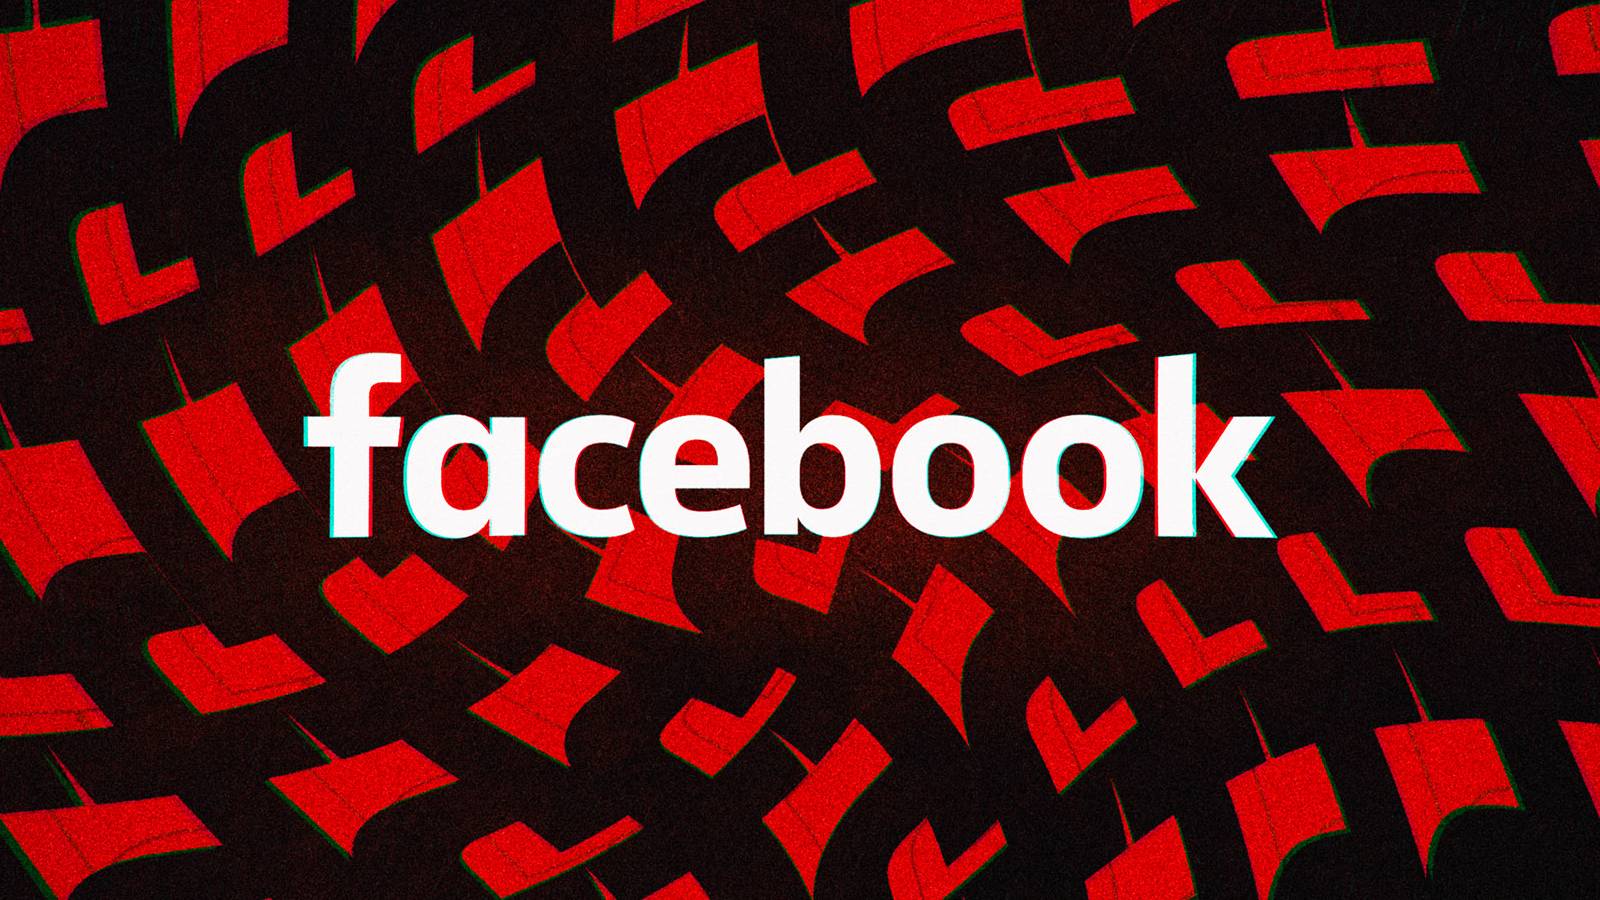 Facebook Nou Update Lansat, ce Schimbari Aduce in Telefoane si Tablete